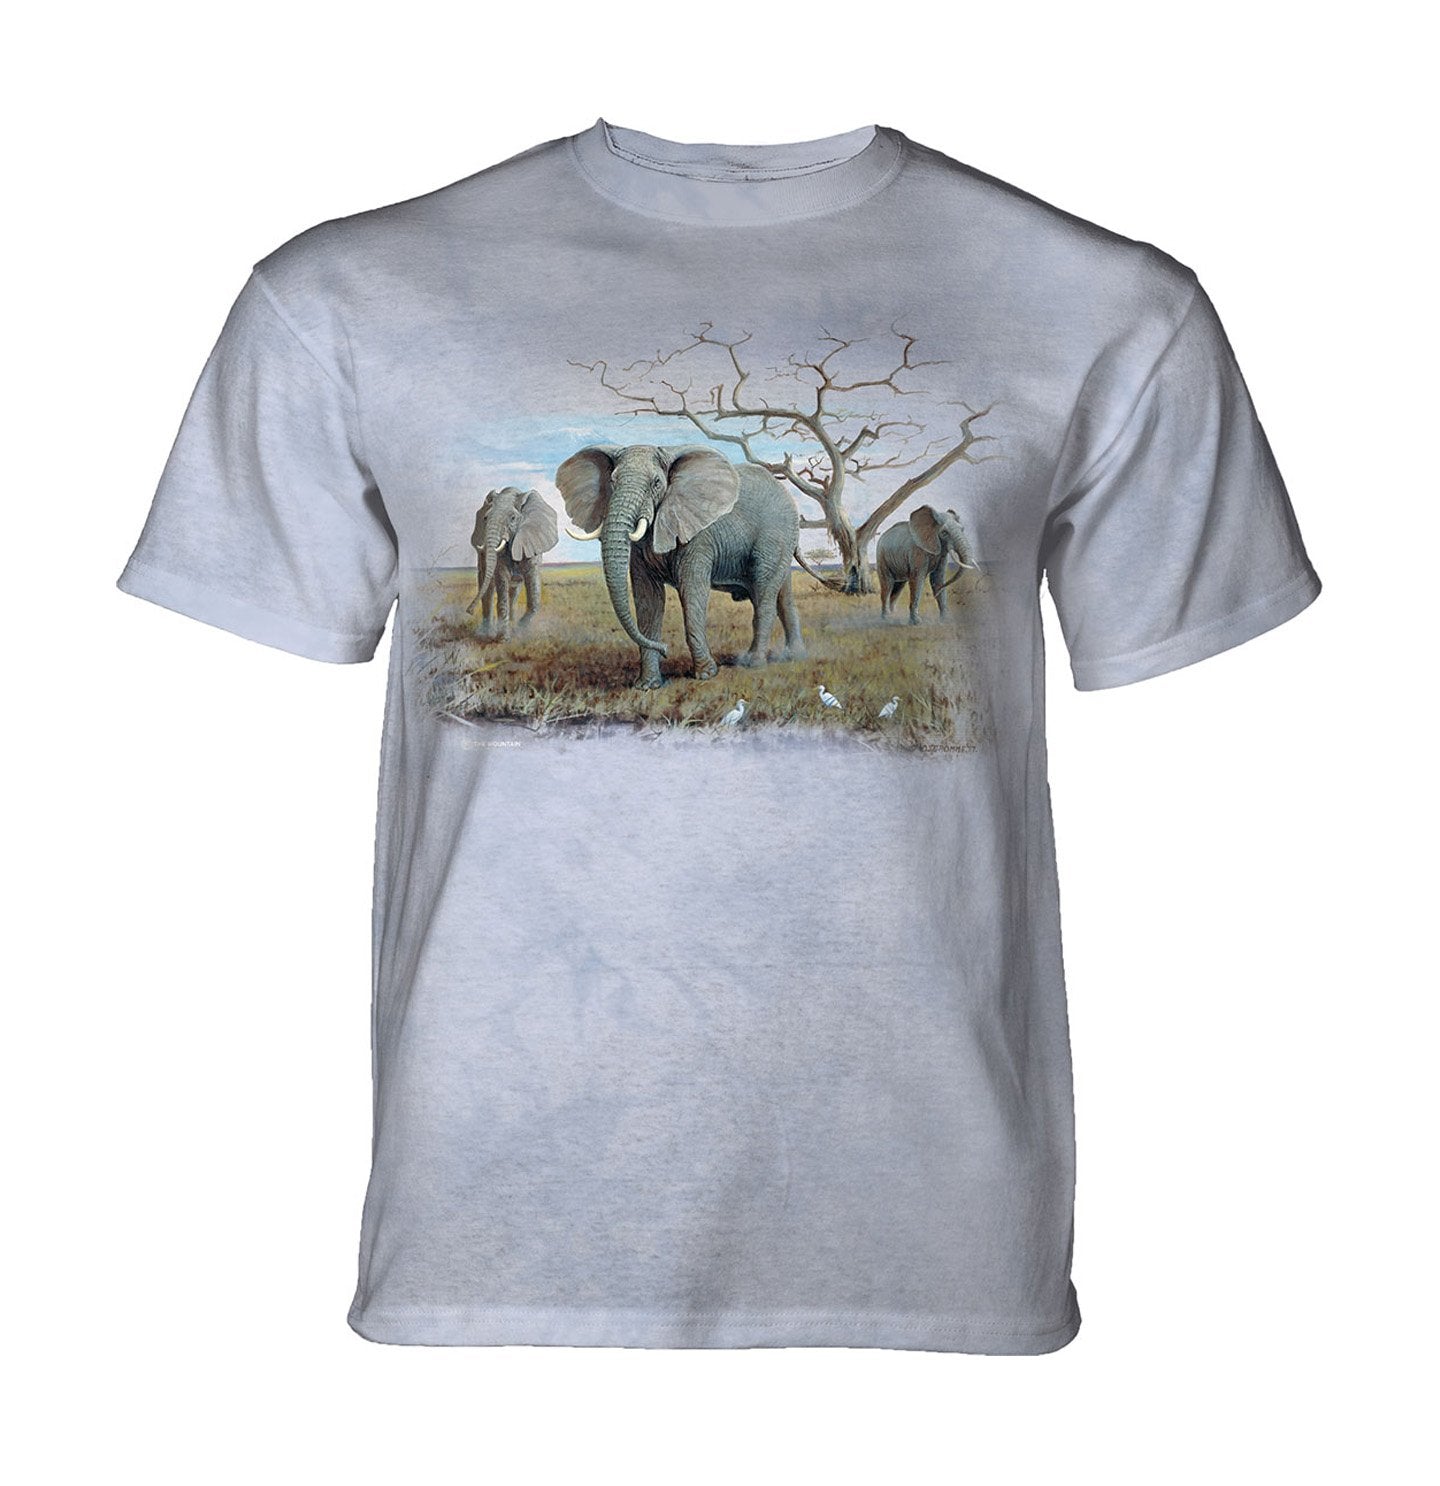 The Mountain - Three African Elephants - Kids' Unisex T-Shirt